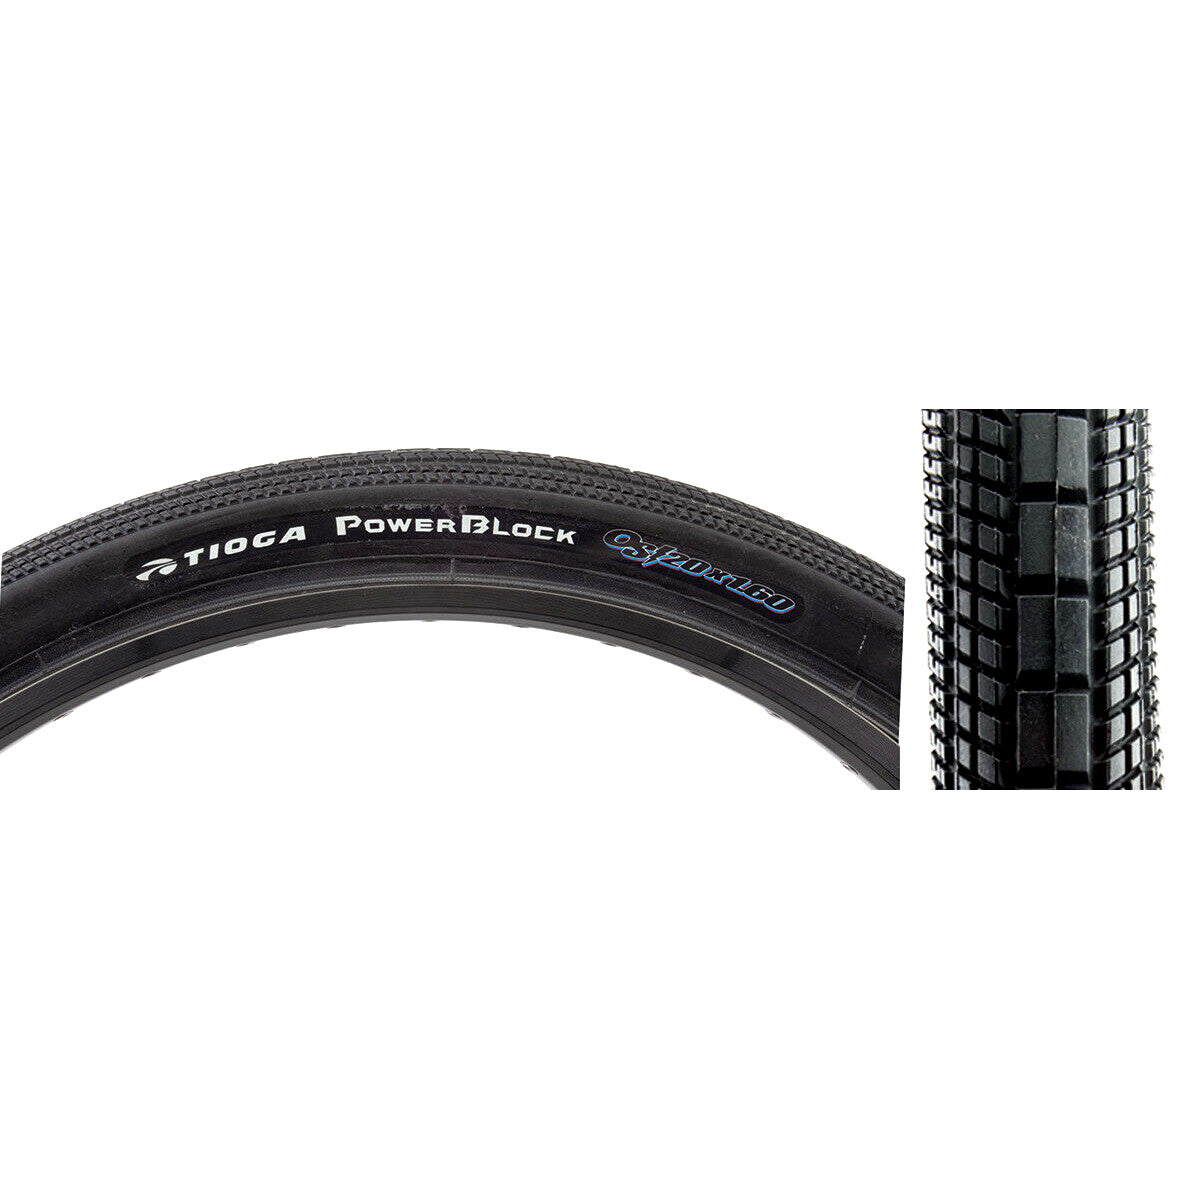 20x1.60 OS-20 (451mm) Tioga Power Block (PowerBlock) BMX tire - Black